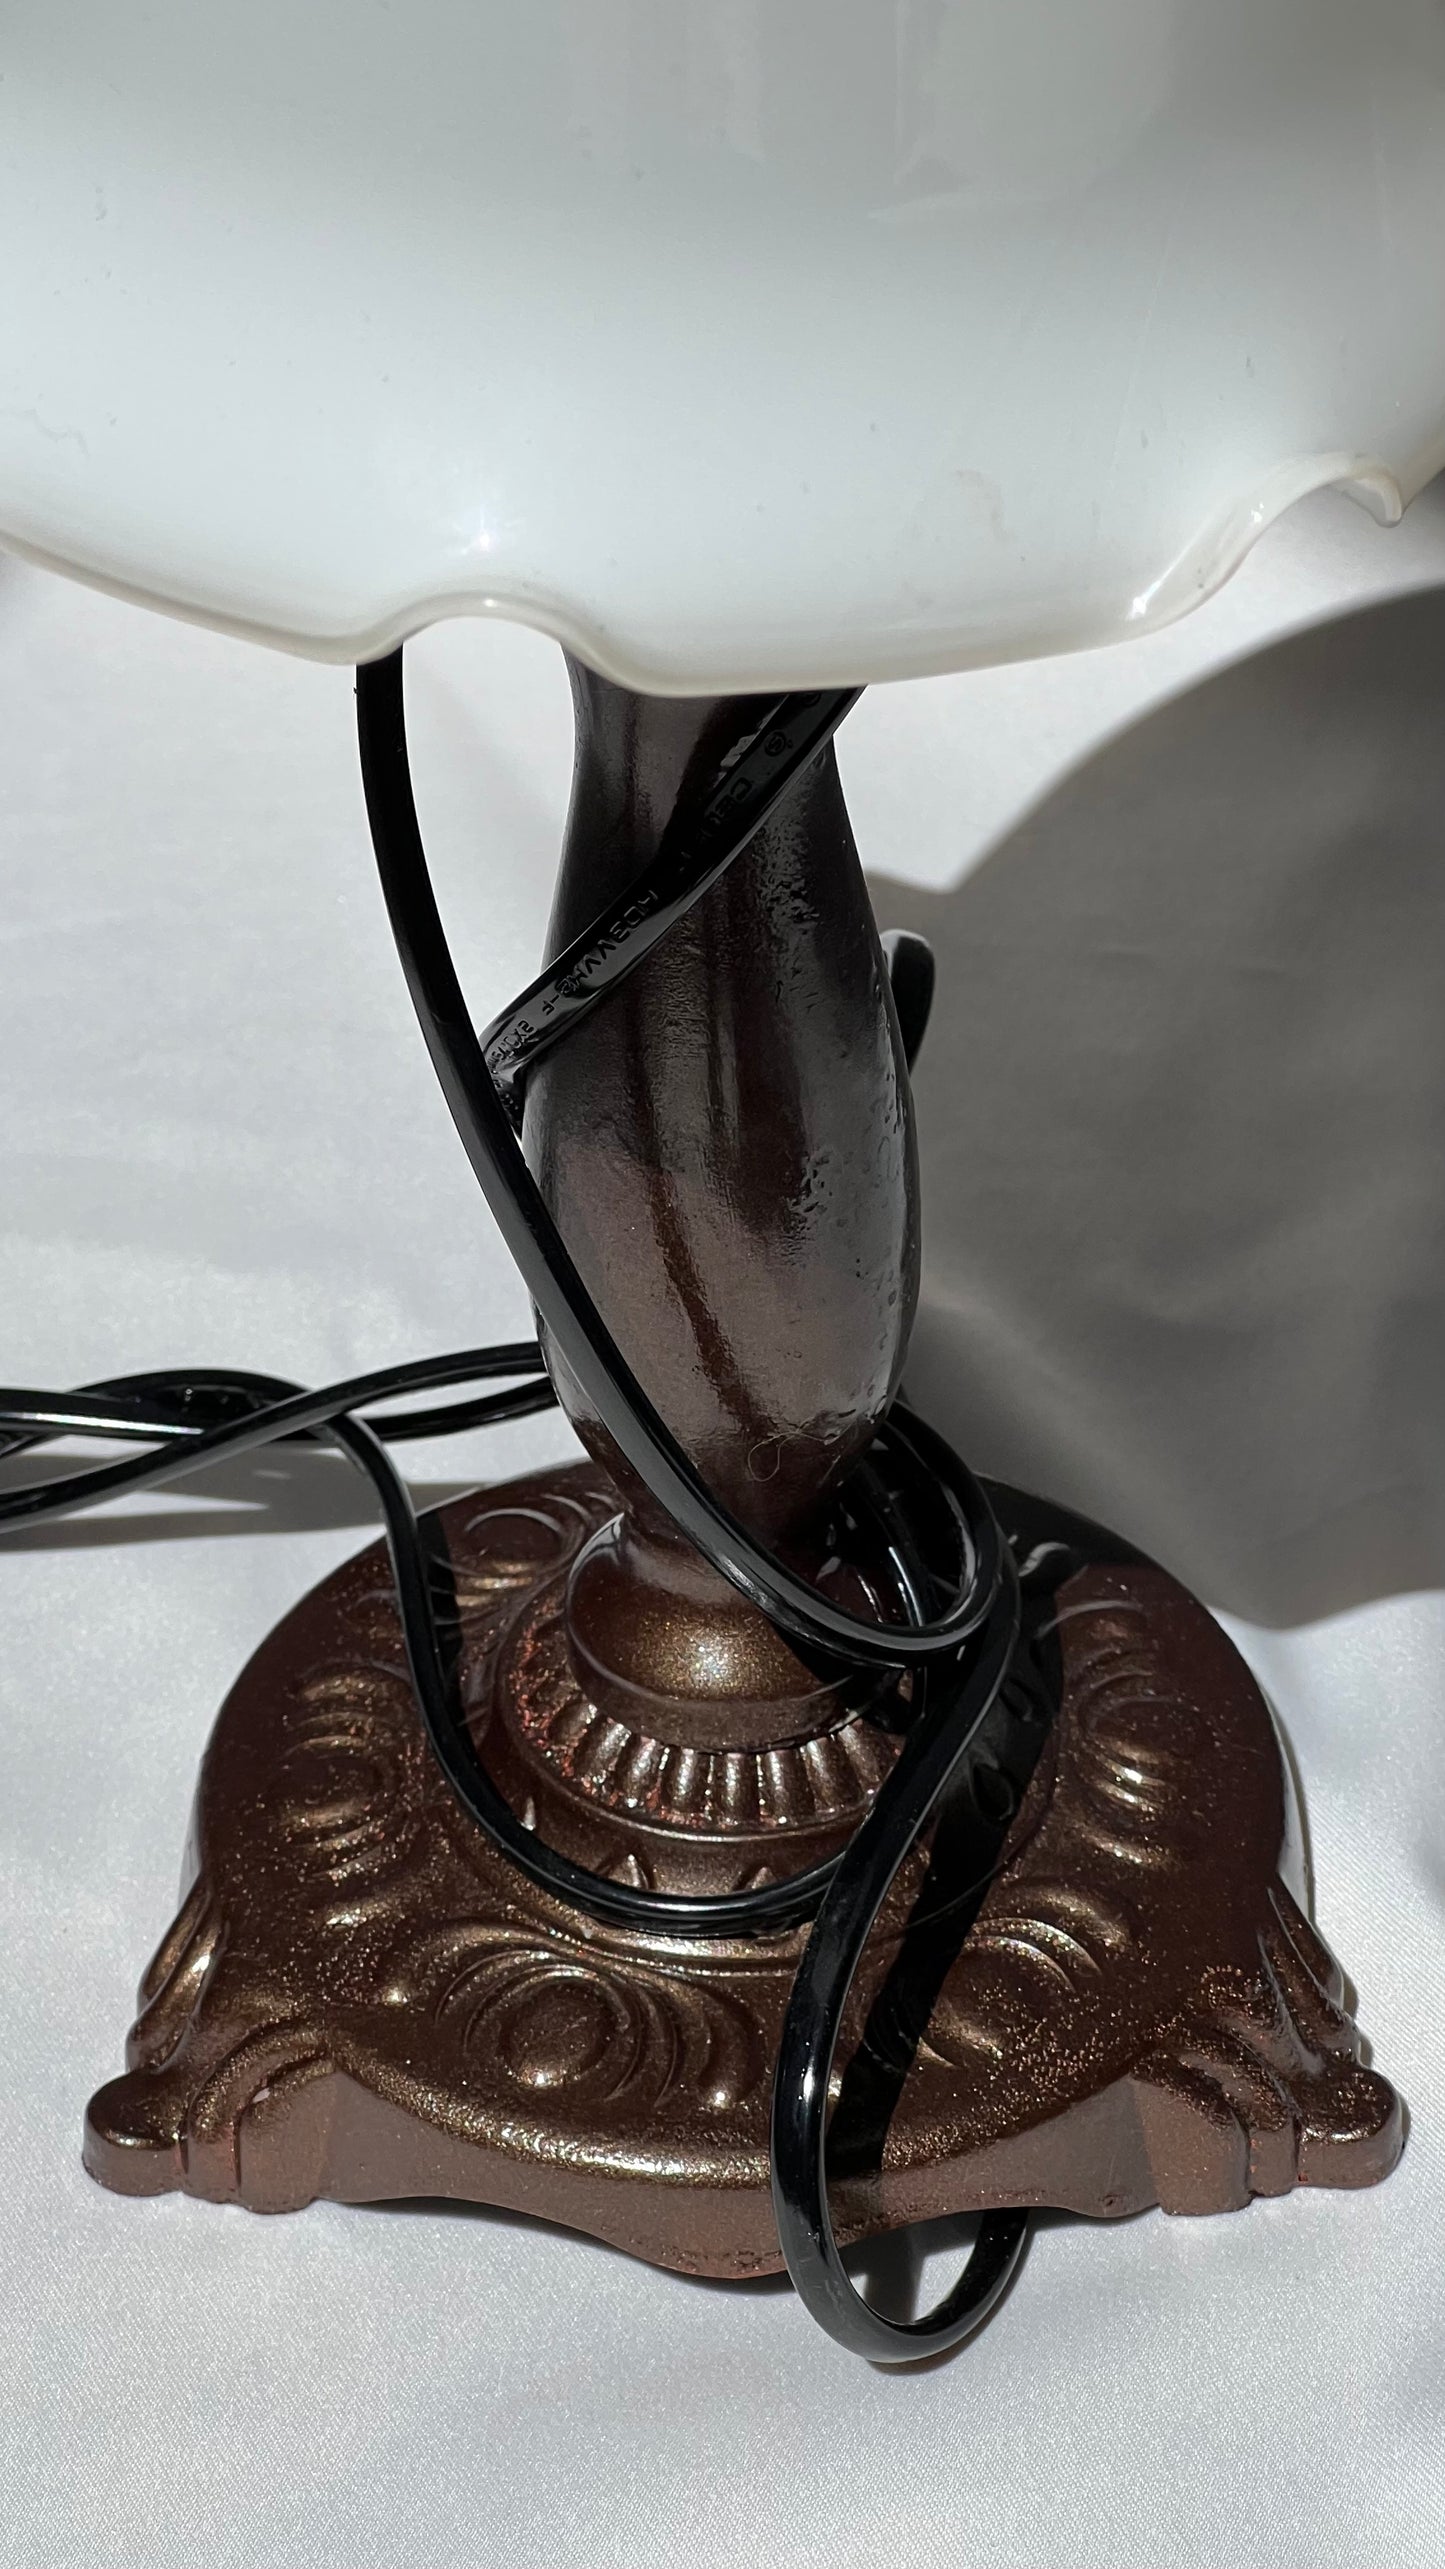 Bell lamp | מנורה פעמונית